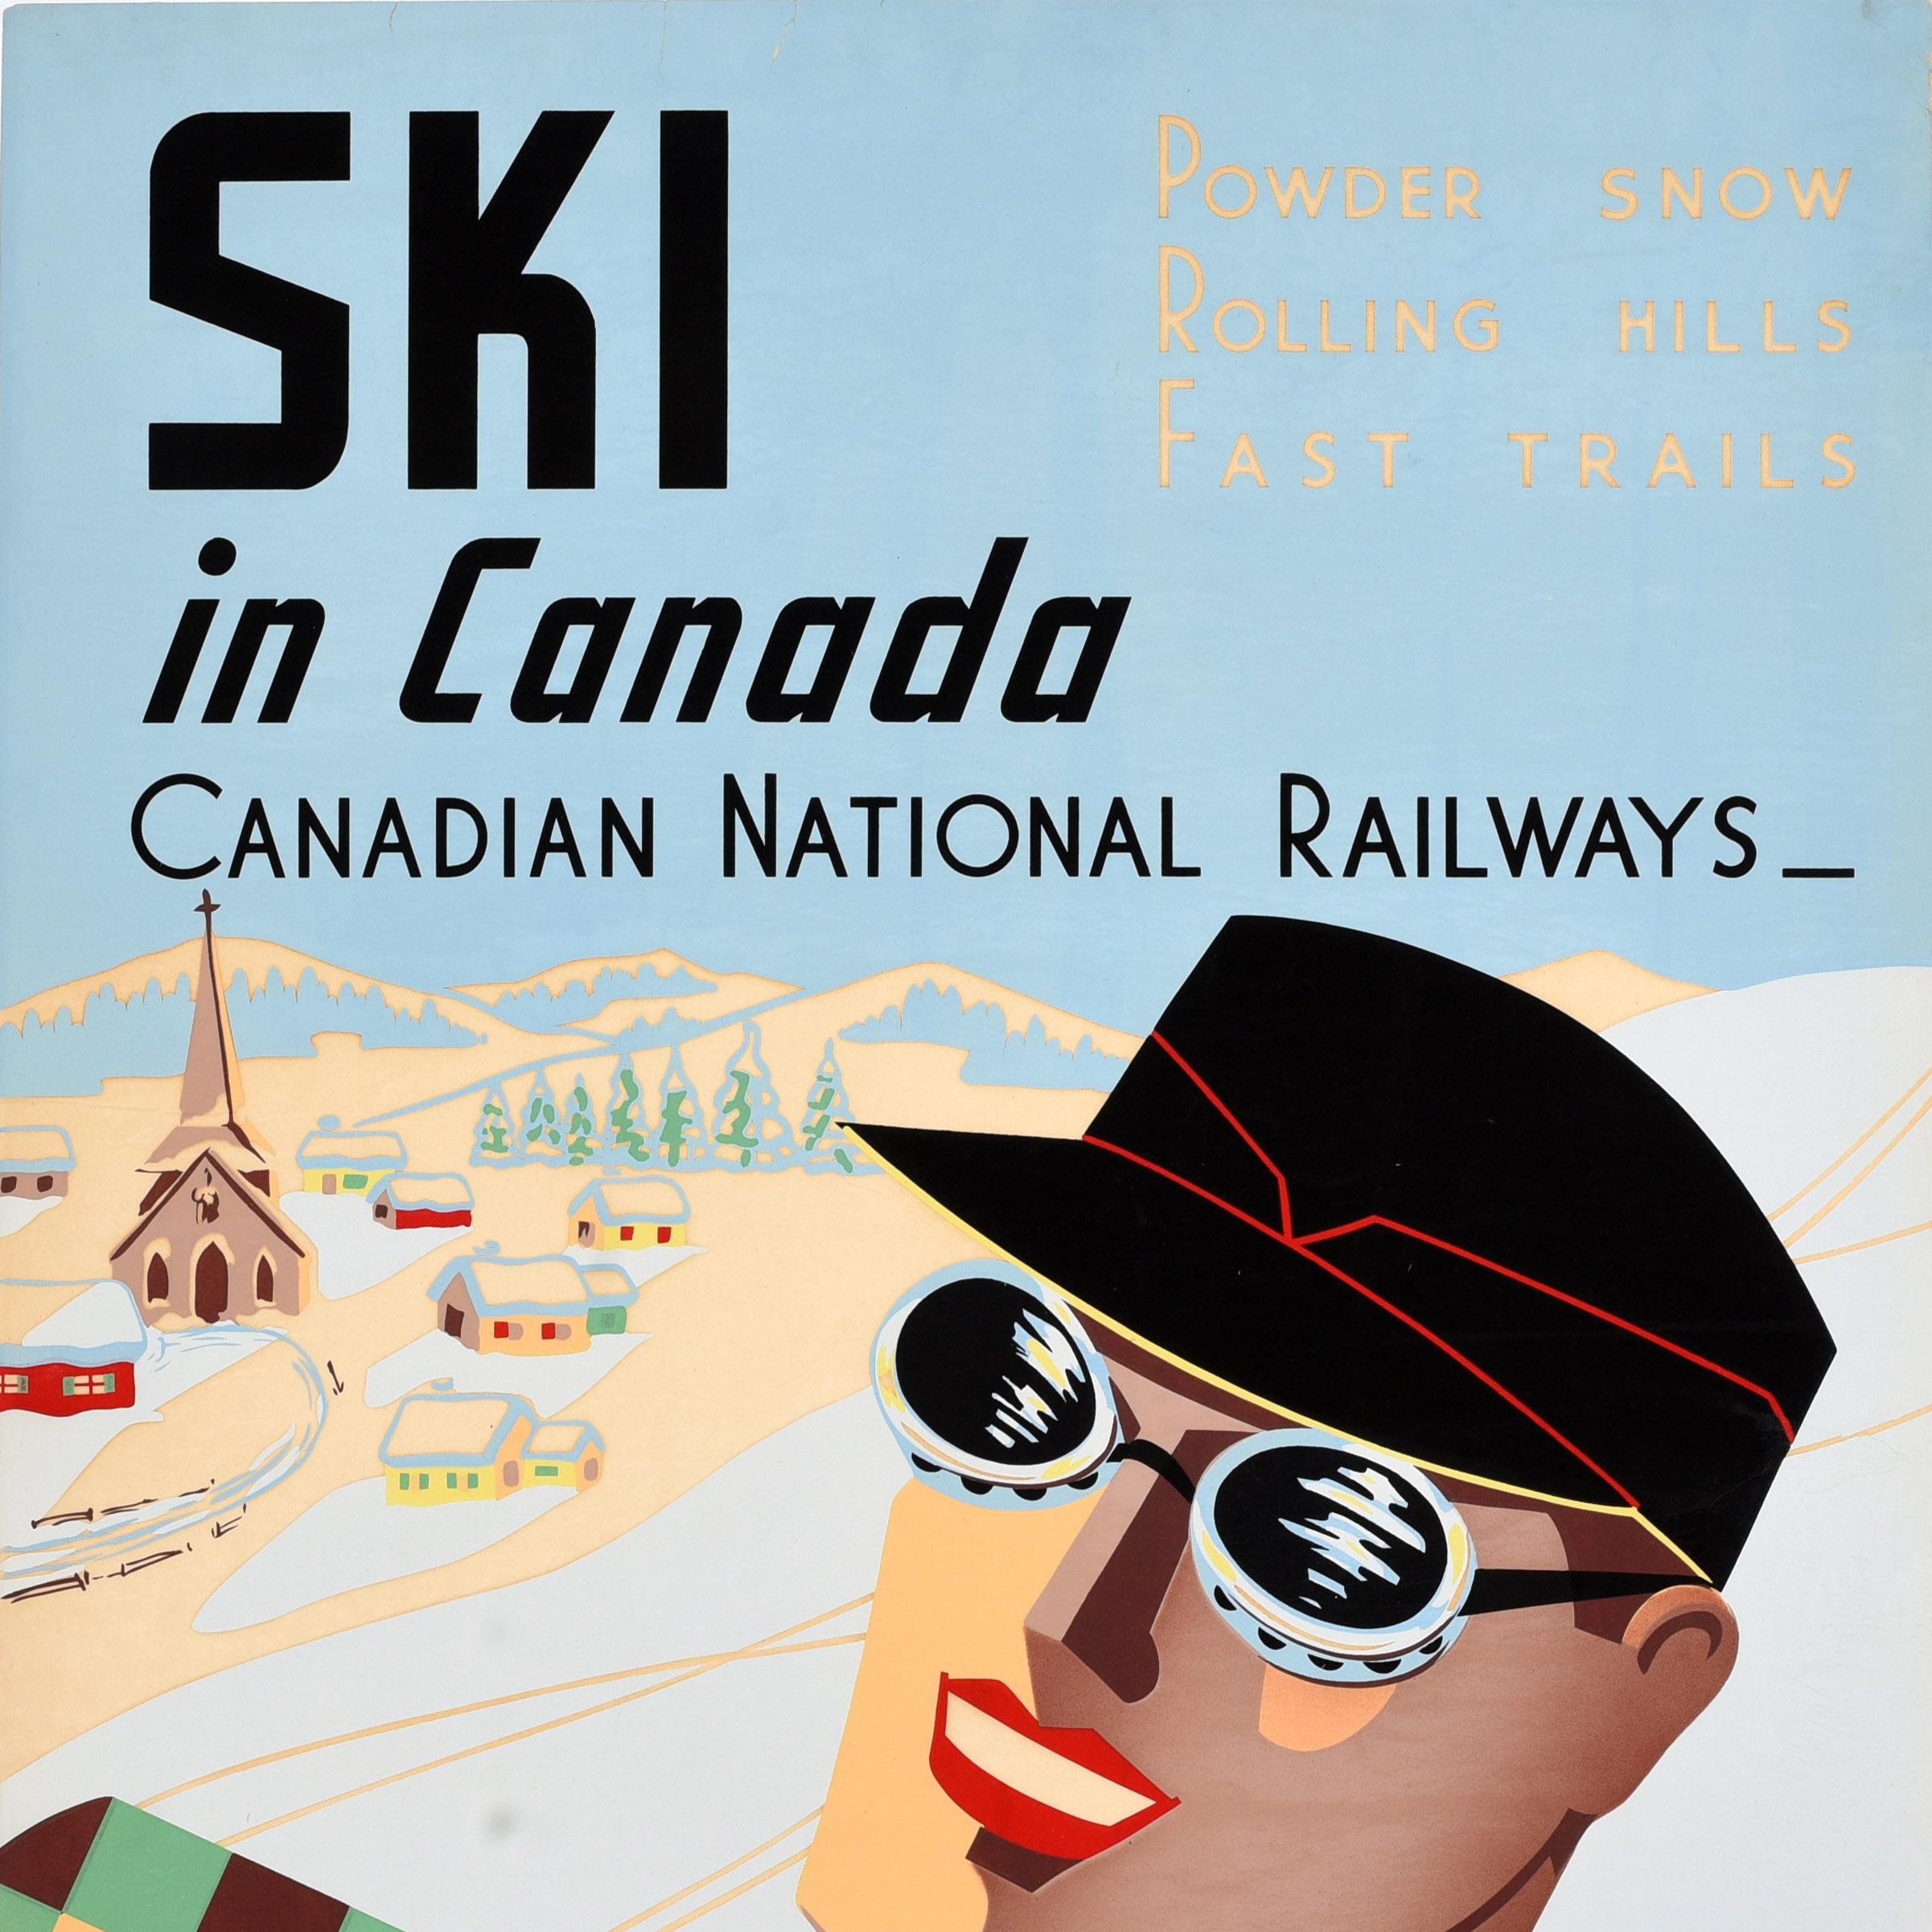 Original Vintage Winter Sport Poster Ski In Canada Canadian National Railways - Art Deco Print by Unknown